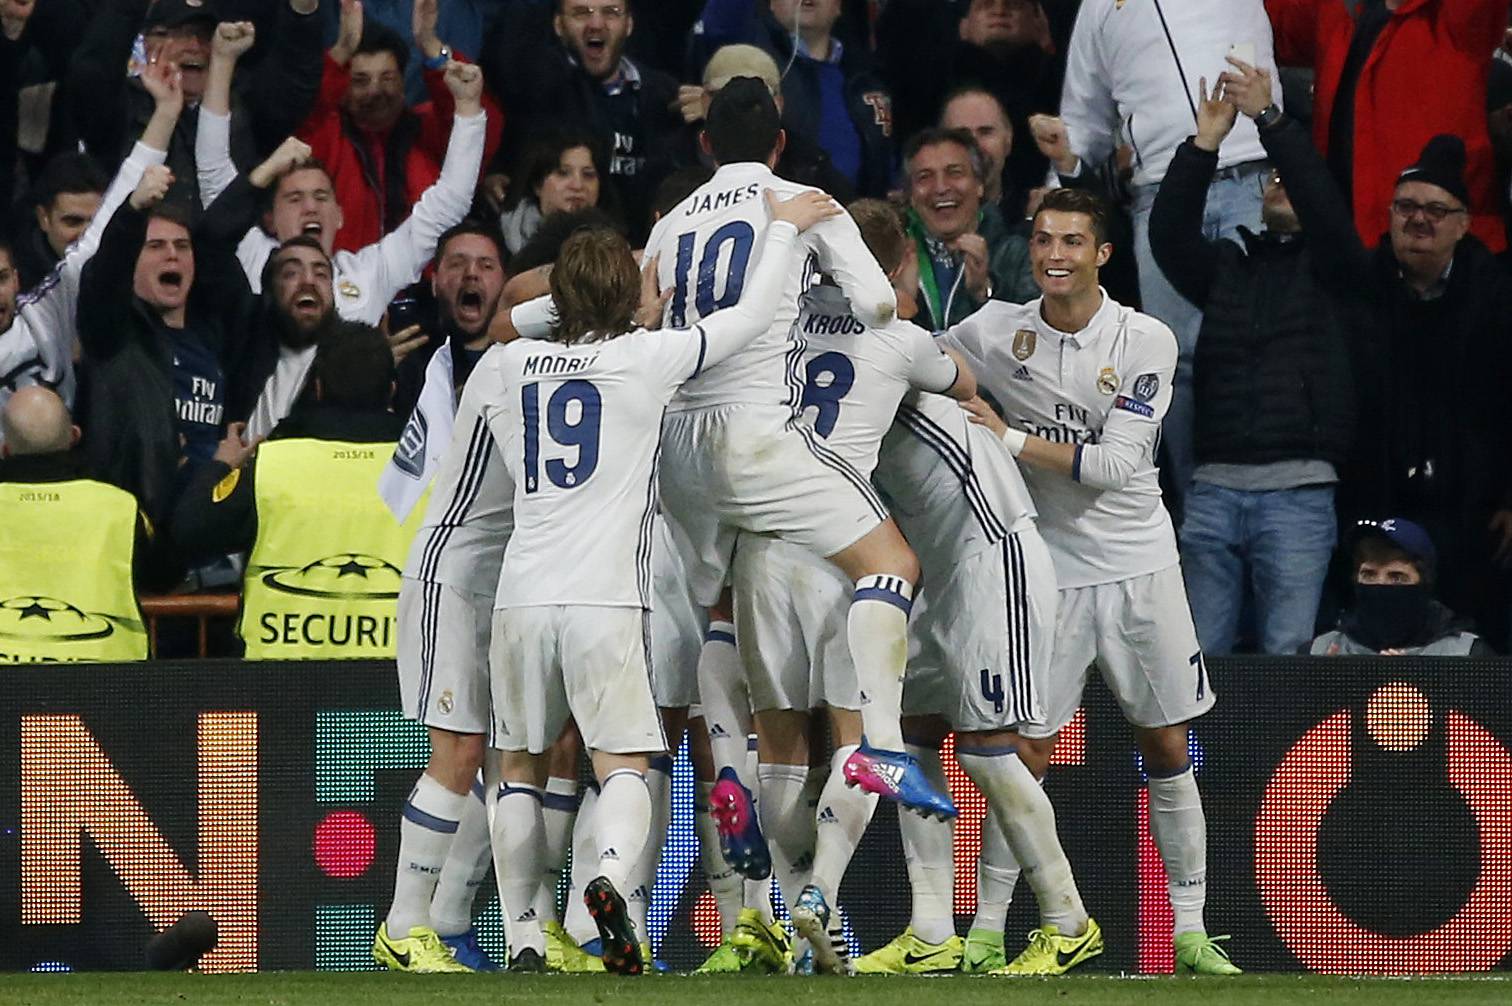 Real Madrid's Casemiro celebrates scoring their third goal with team mates